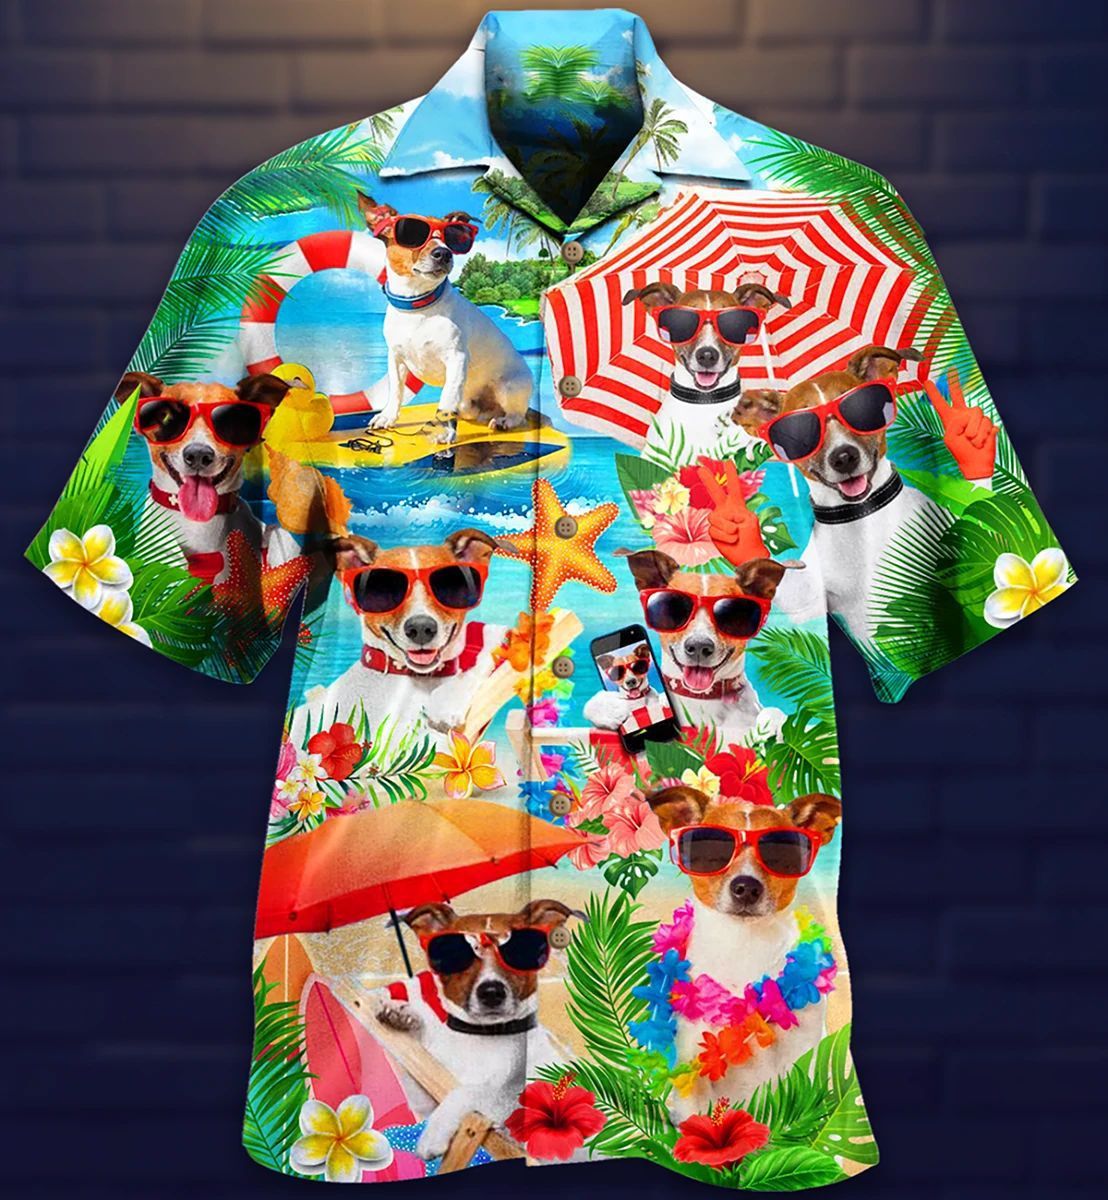 Beachside Santa Surprise: Men's Digital Print Santa Hawaiian Shirt. Surprise everyone with a festive twist - a digitally printed Santa Claus on a tropical Hawaiian shirt.